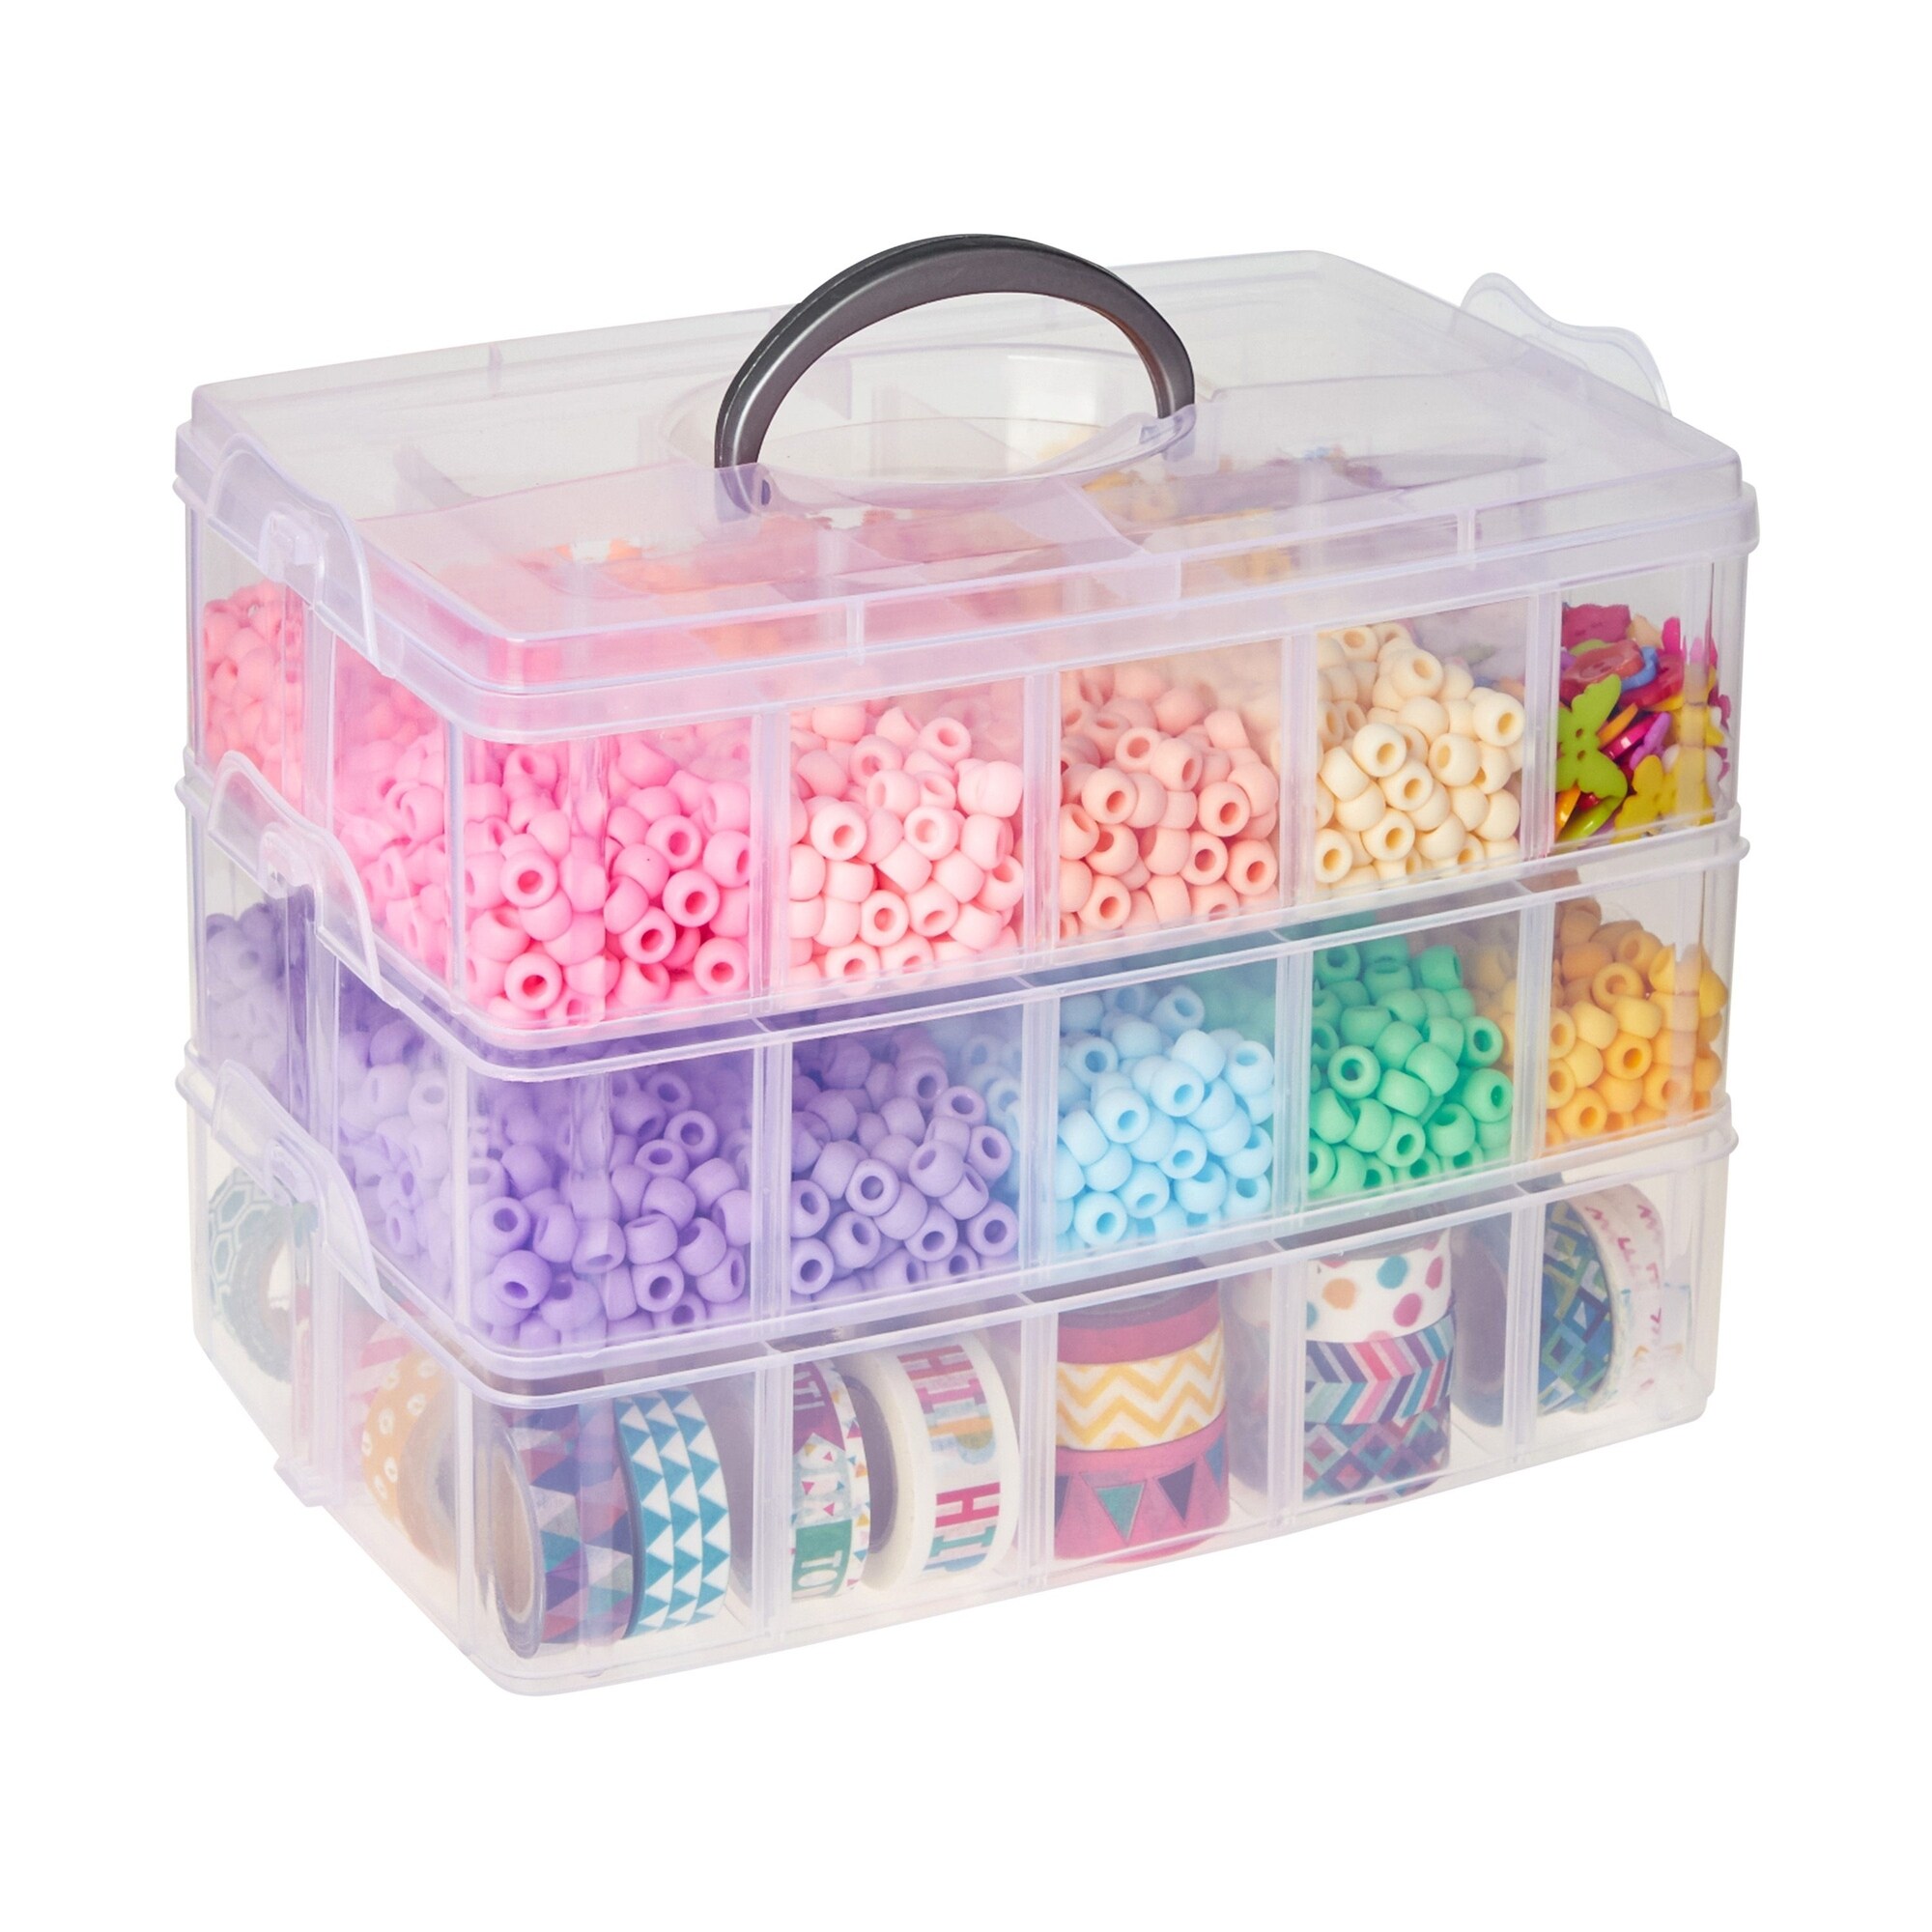 3 Tier Plastic Craft Storage Organizer Box Case with Adjustable